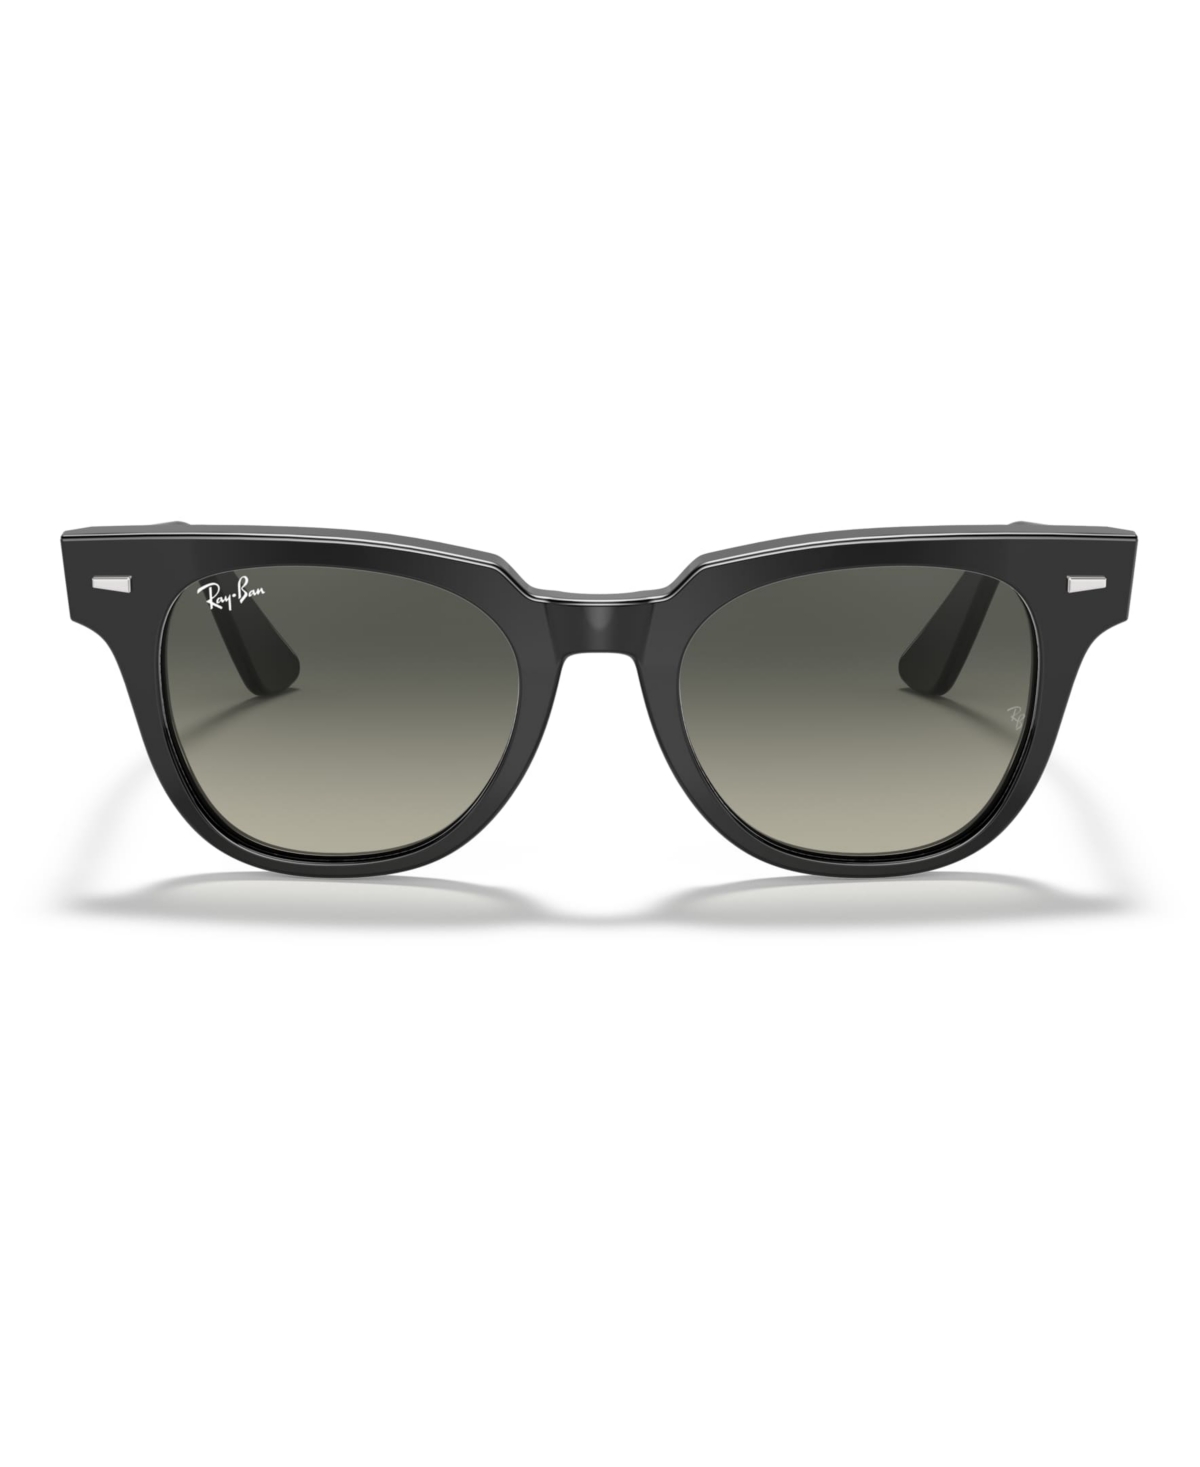 Ray-Ban Sunglasses, RB2168 METEOR & Reviews - Sunglasses by Sunglass Hut -  Handbags & Accessories - Macy's